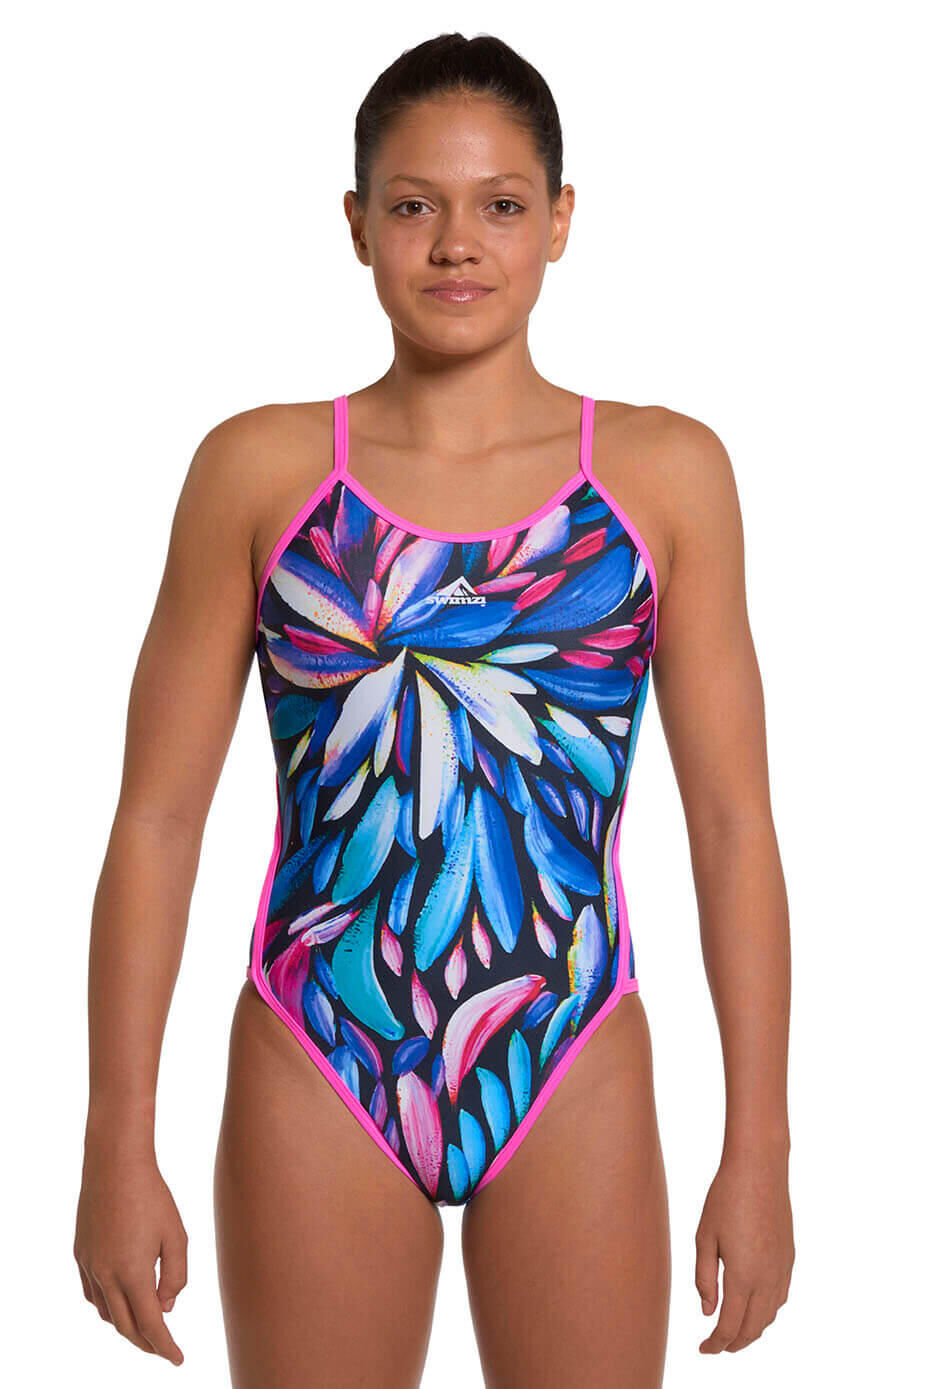 SWIMZI Swimzi Thin Strap Womens One-Piece swimsuit, Blue, Aqua, White and Pink Feathers